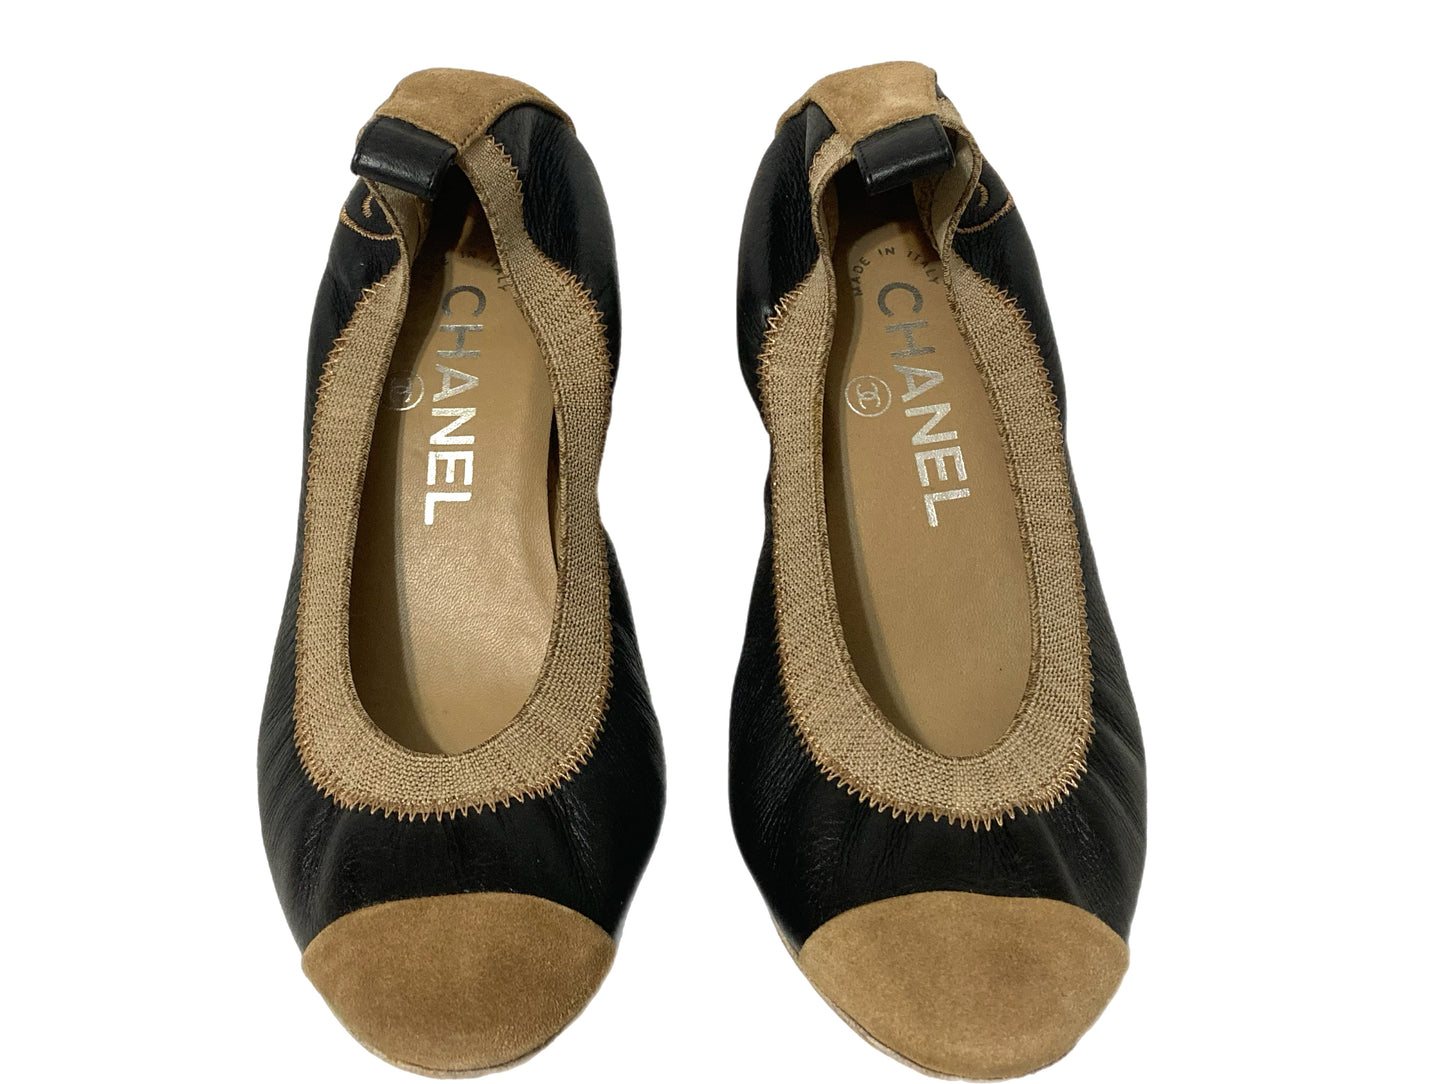 CHANEL Leather Ballet Pumps Black / Tan Size 35.5